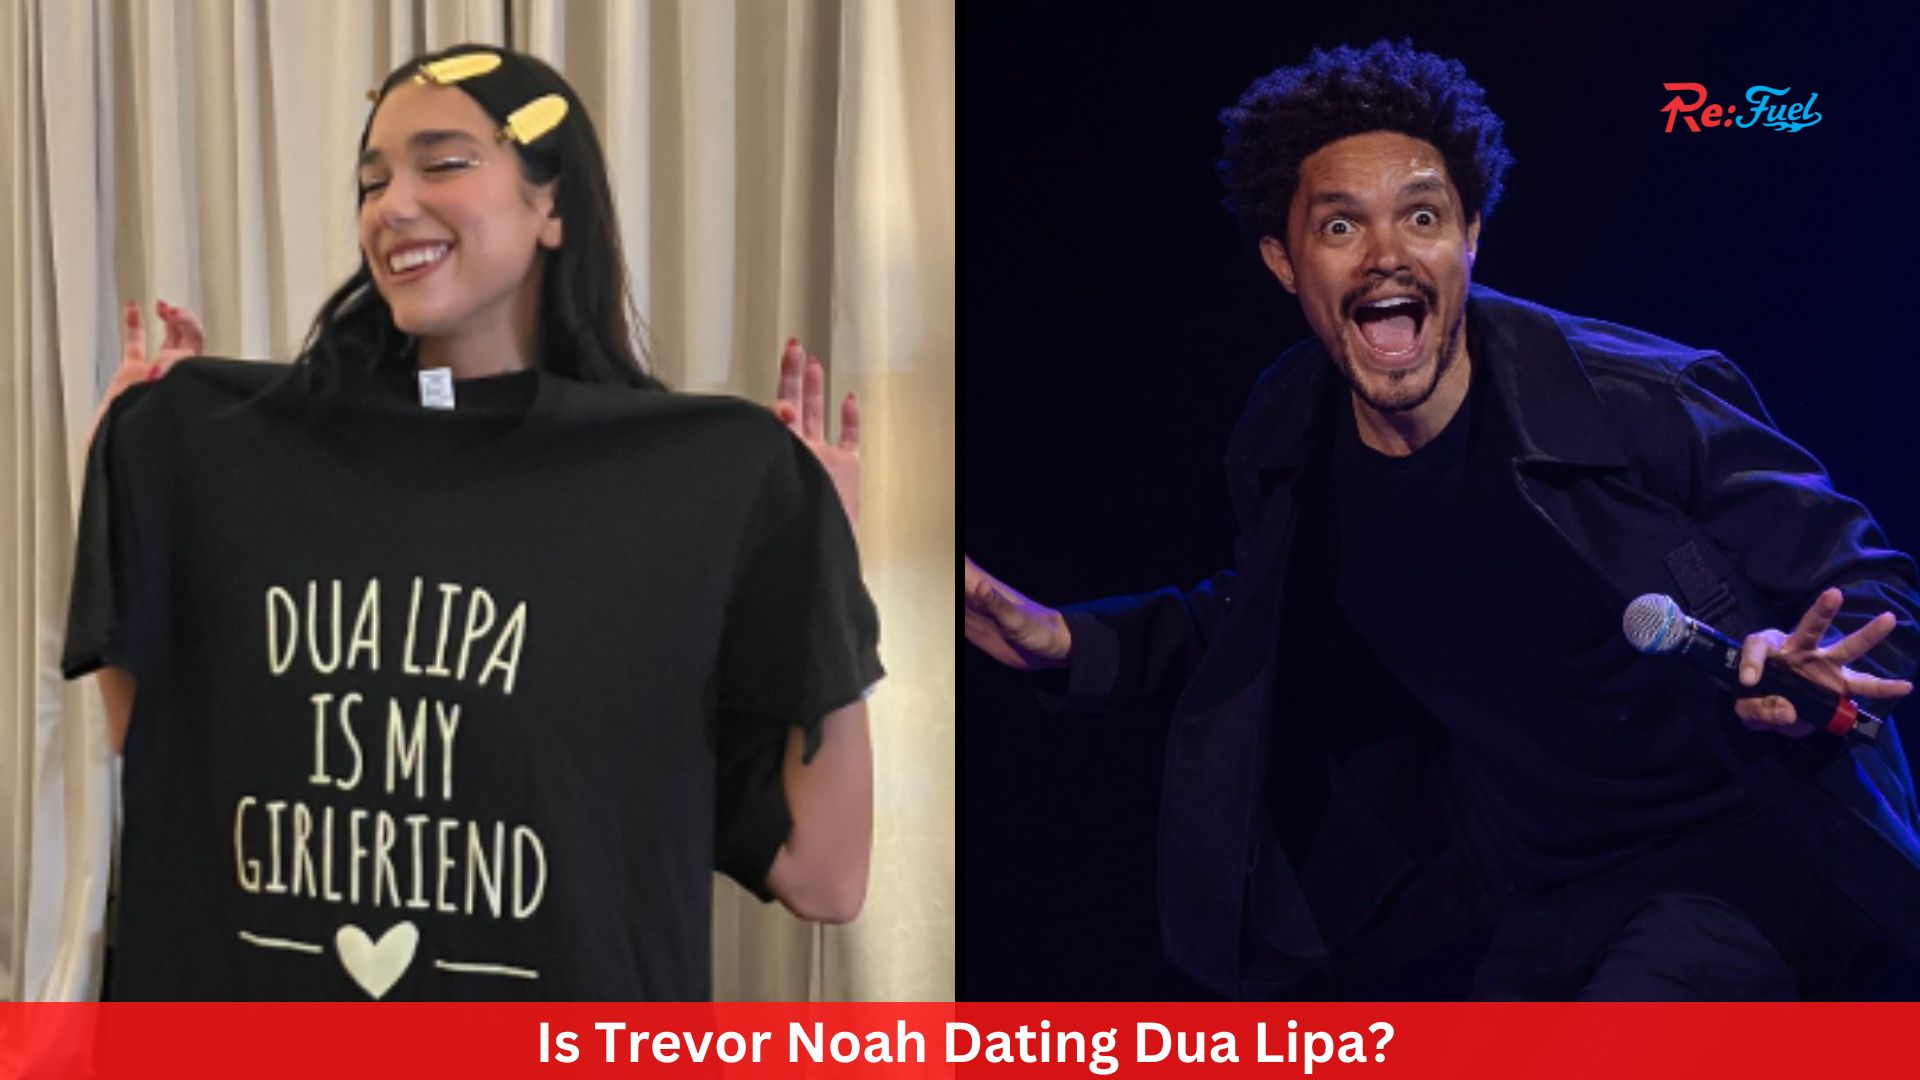 Is Trevor Noah Dating Dua Lipa? Kissing Pictures Confirm Dua Lipa Is Now Trevor Noah's Girlfriend